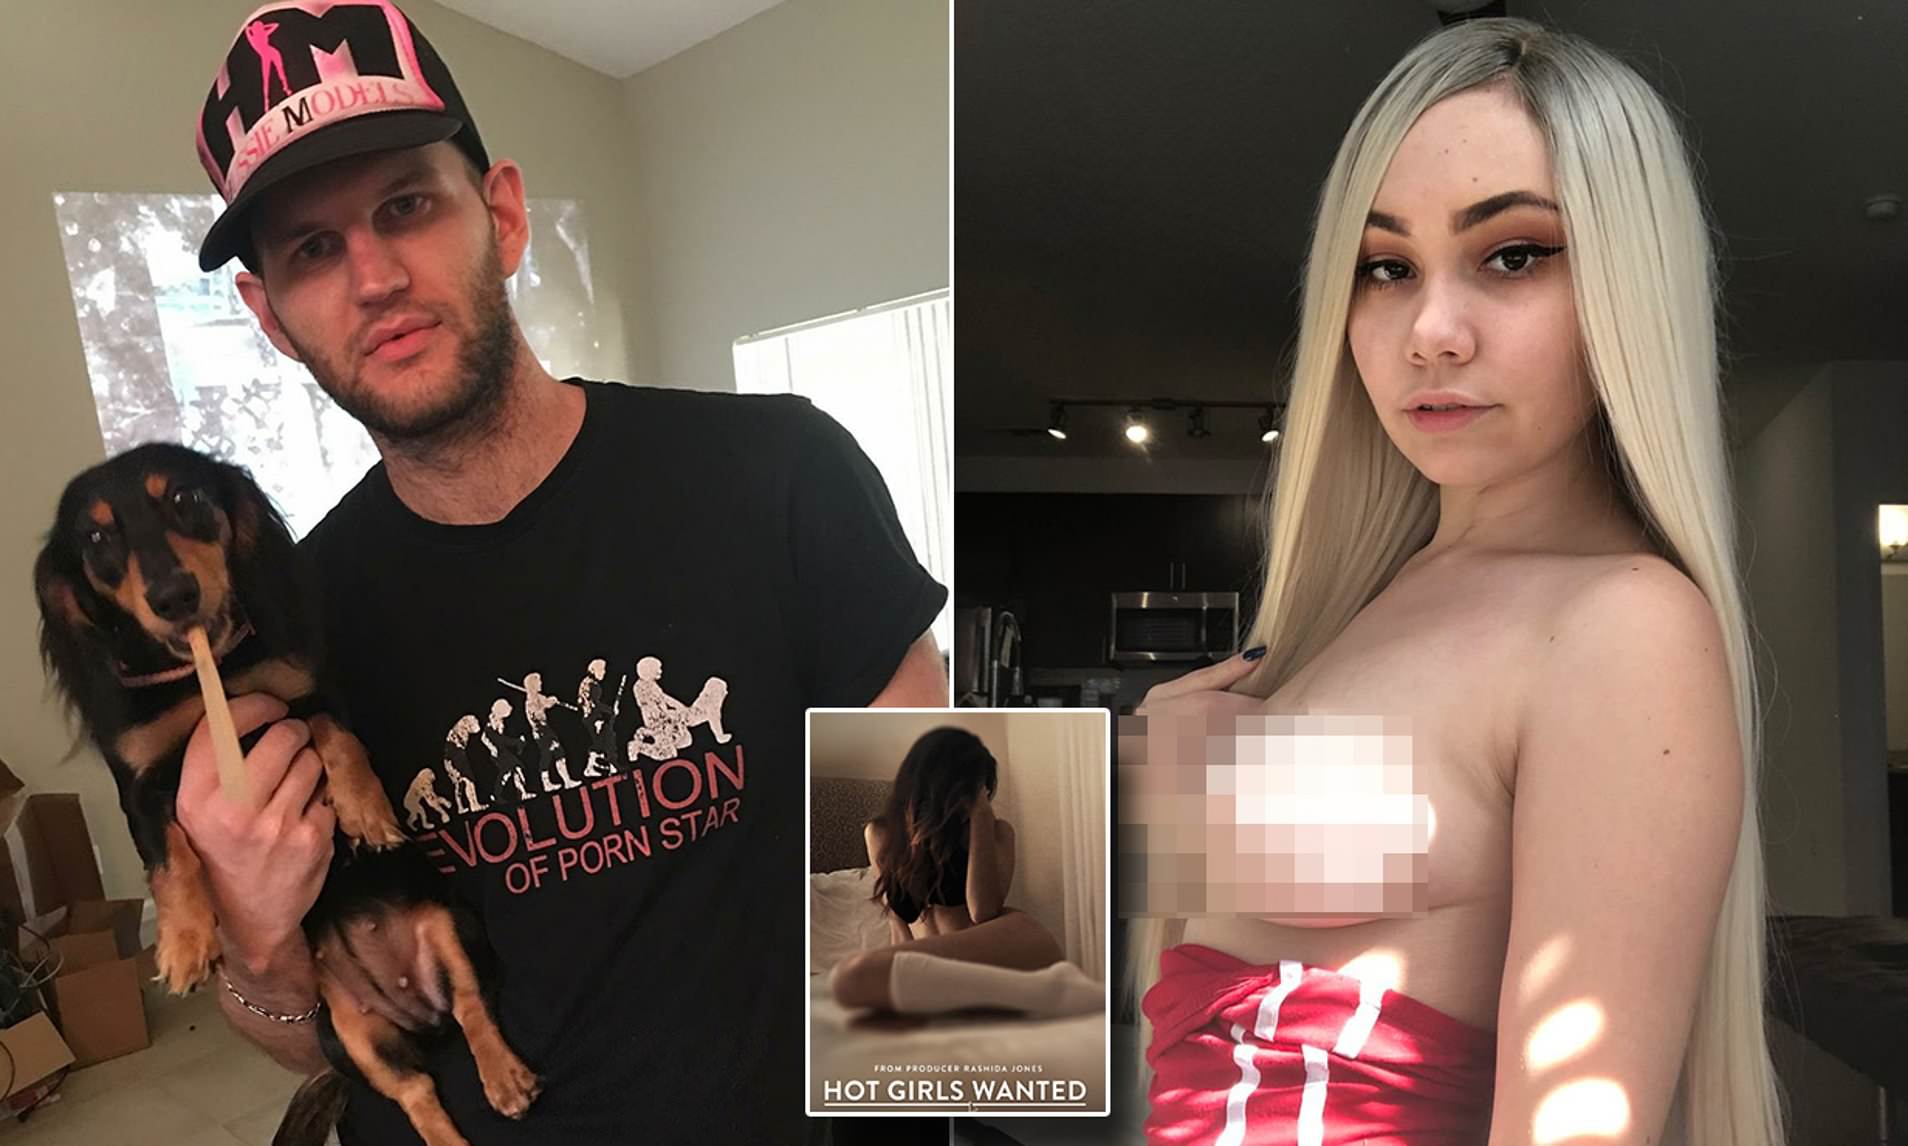 danielle rankine share porn stars in hot girls wanted photos